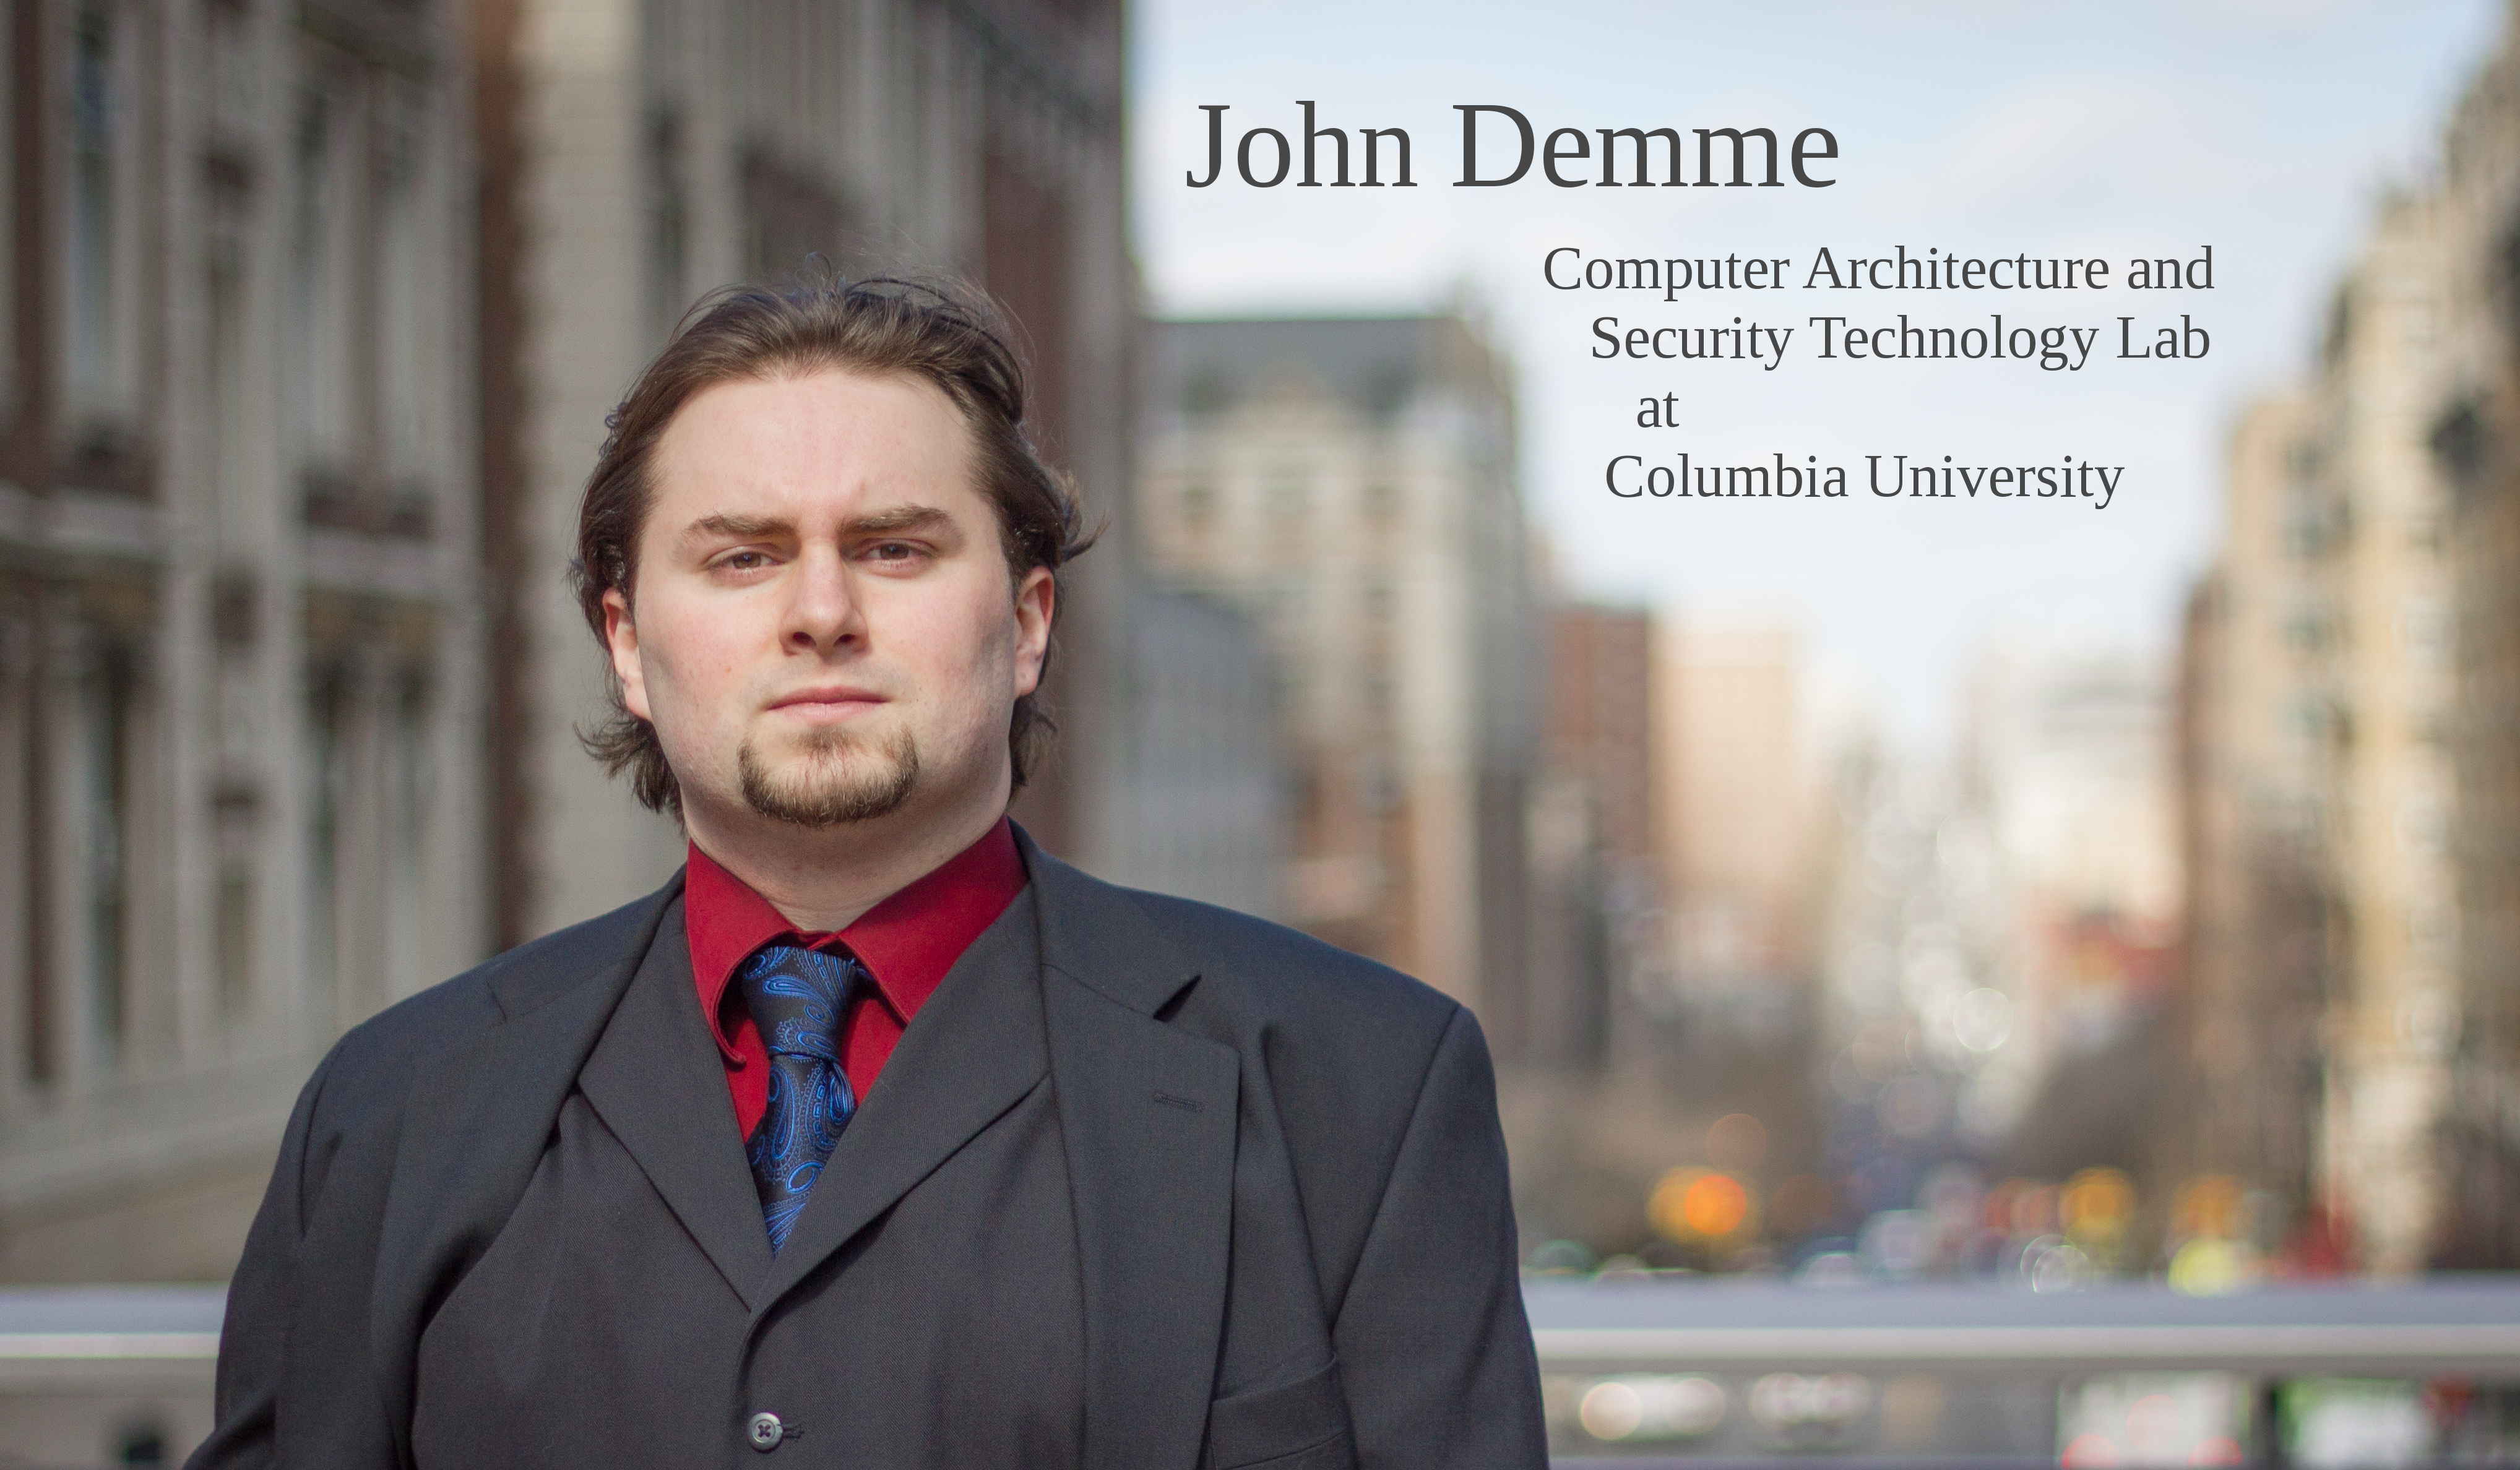 John Demme